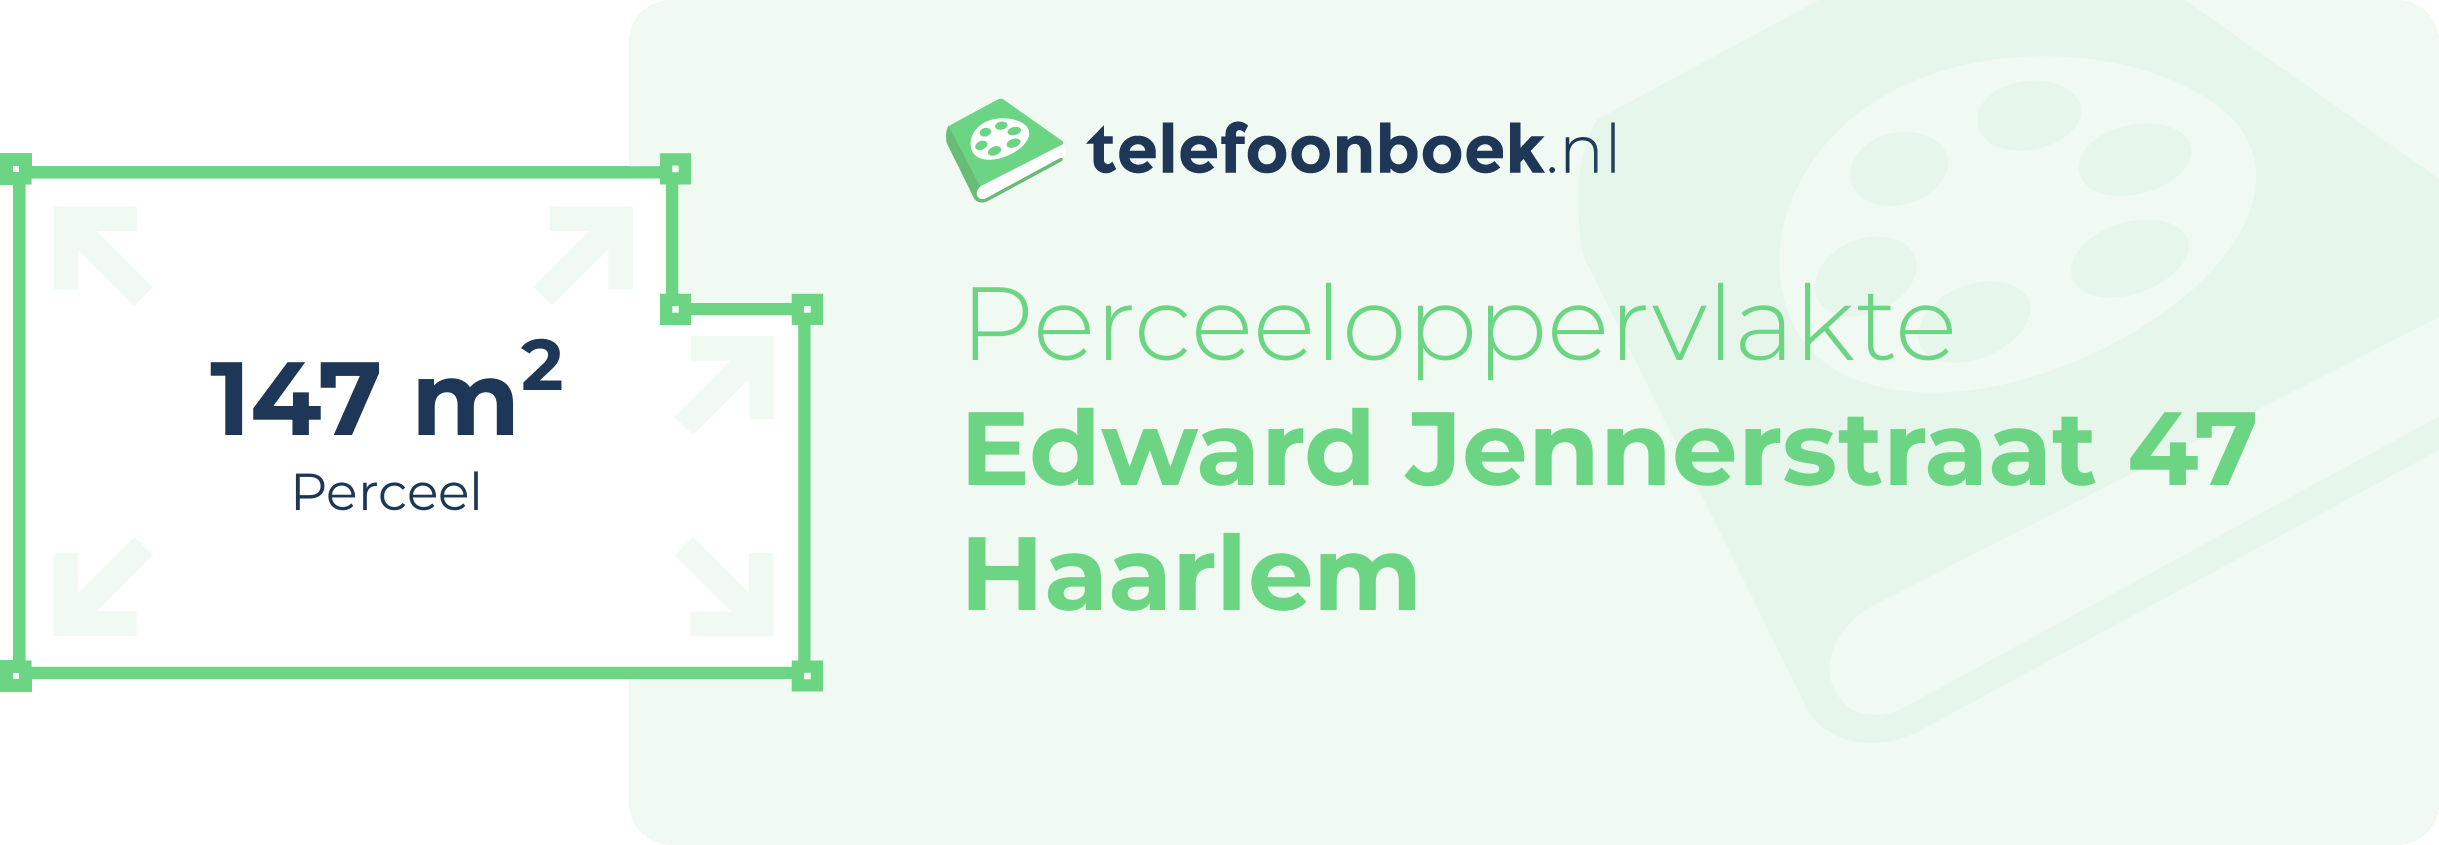 Perceeloppervlakte Edward Jennerstraat 47 Haarlem